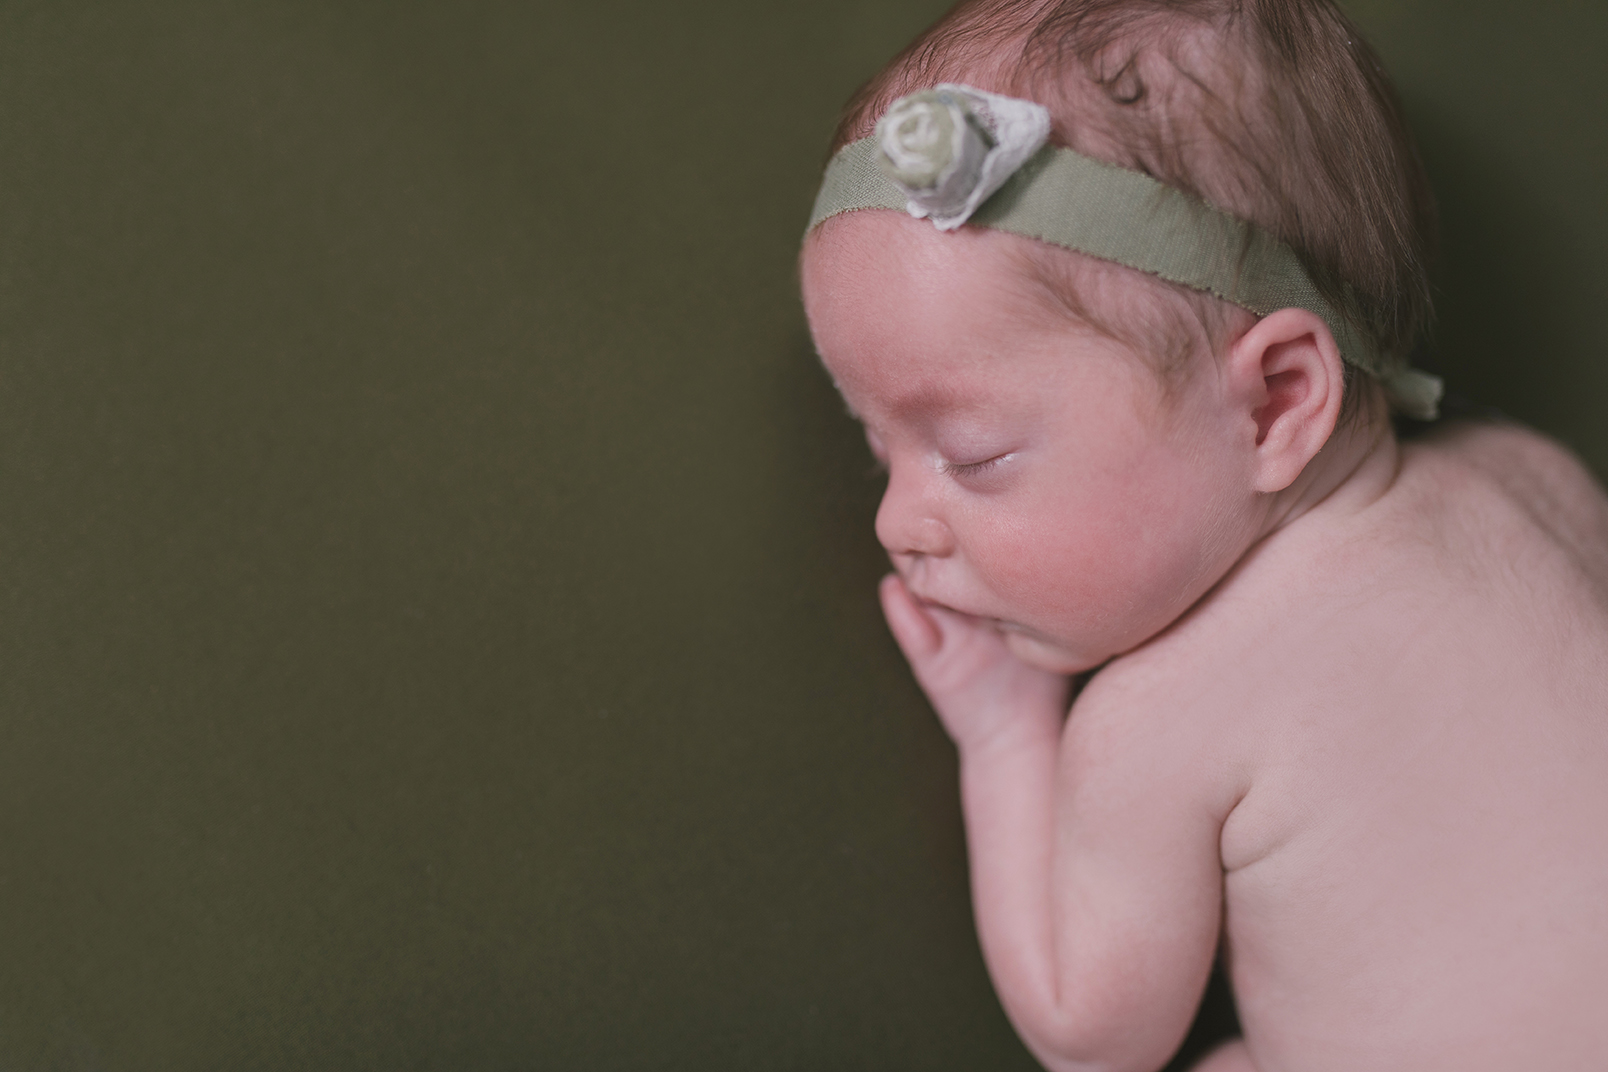 multiples newborn session with newborn triplets in warren ohio by newborn photographer christie leigh photo_4.jpg